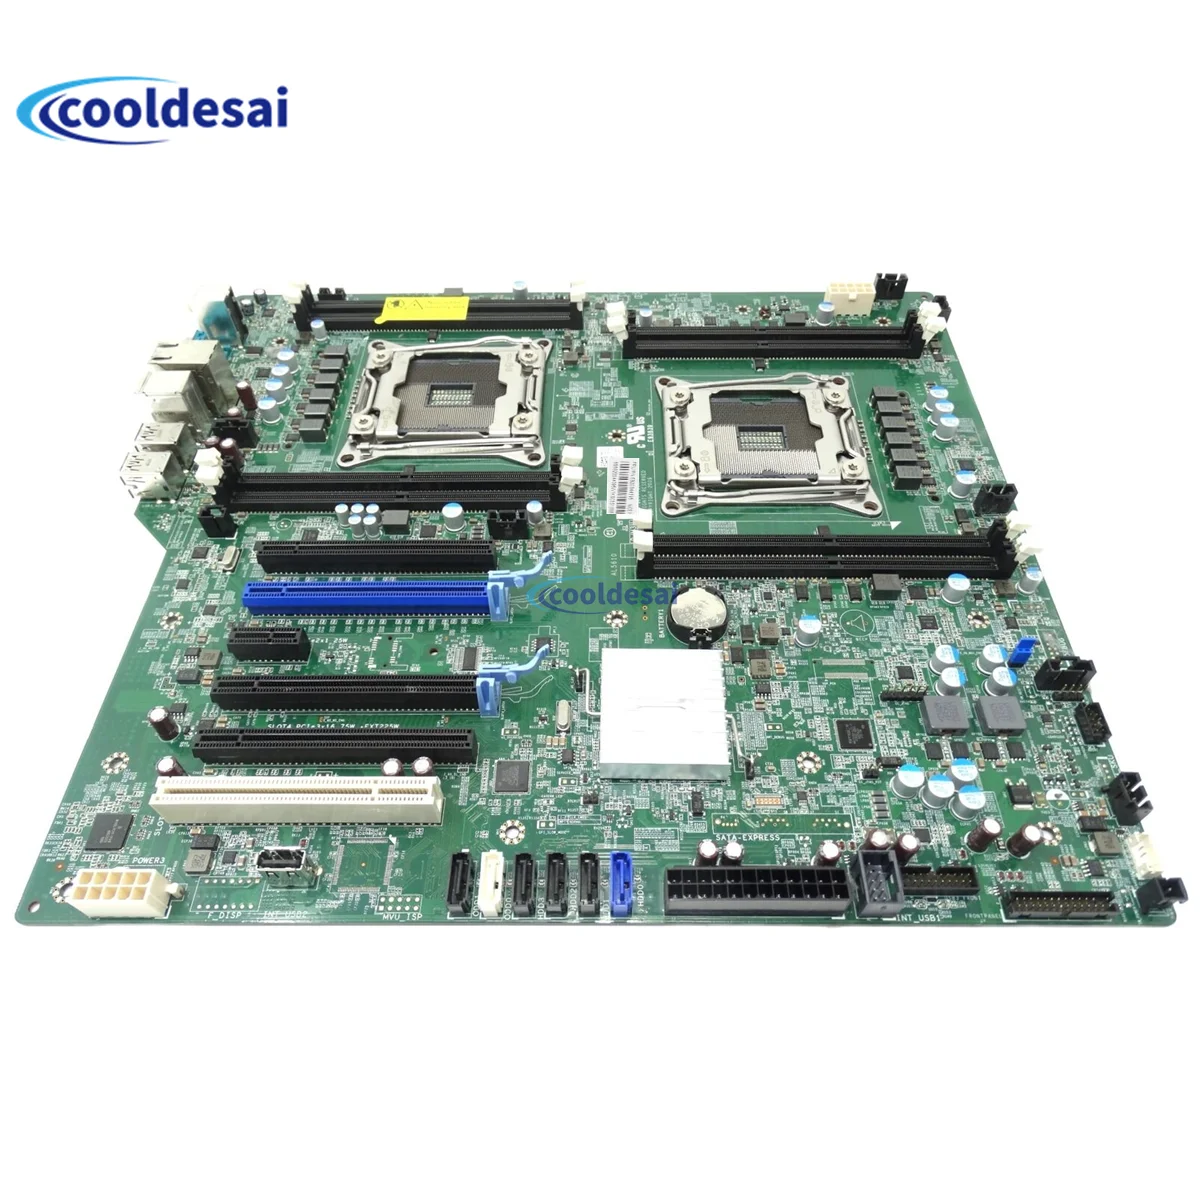 

E93839 DJM3H AL5610 VD98F KJCC5 GWHMW 04JTD CN-0VD98F CN-0KJCC5 CN-0GWHMW CN-004JTD DDR4 Motherboard for Dell Precision T7810